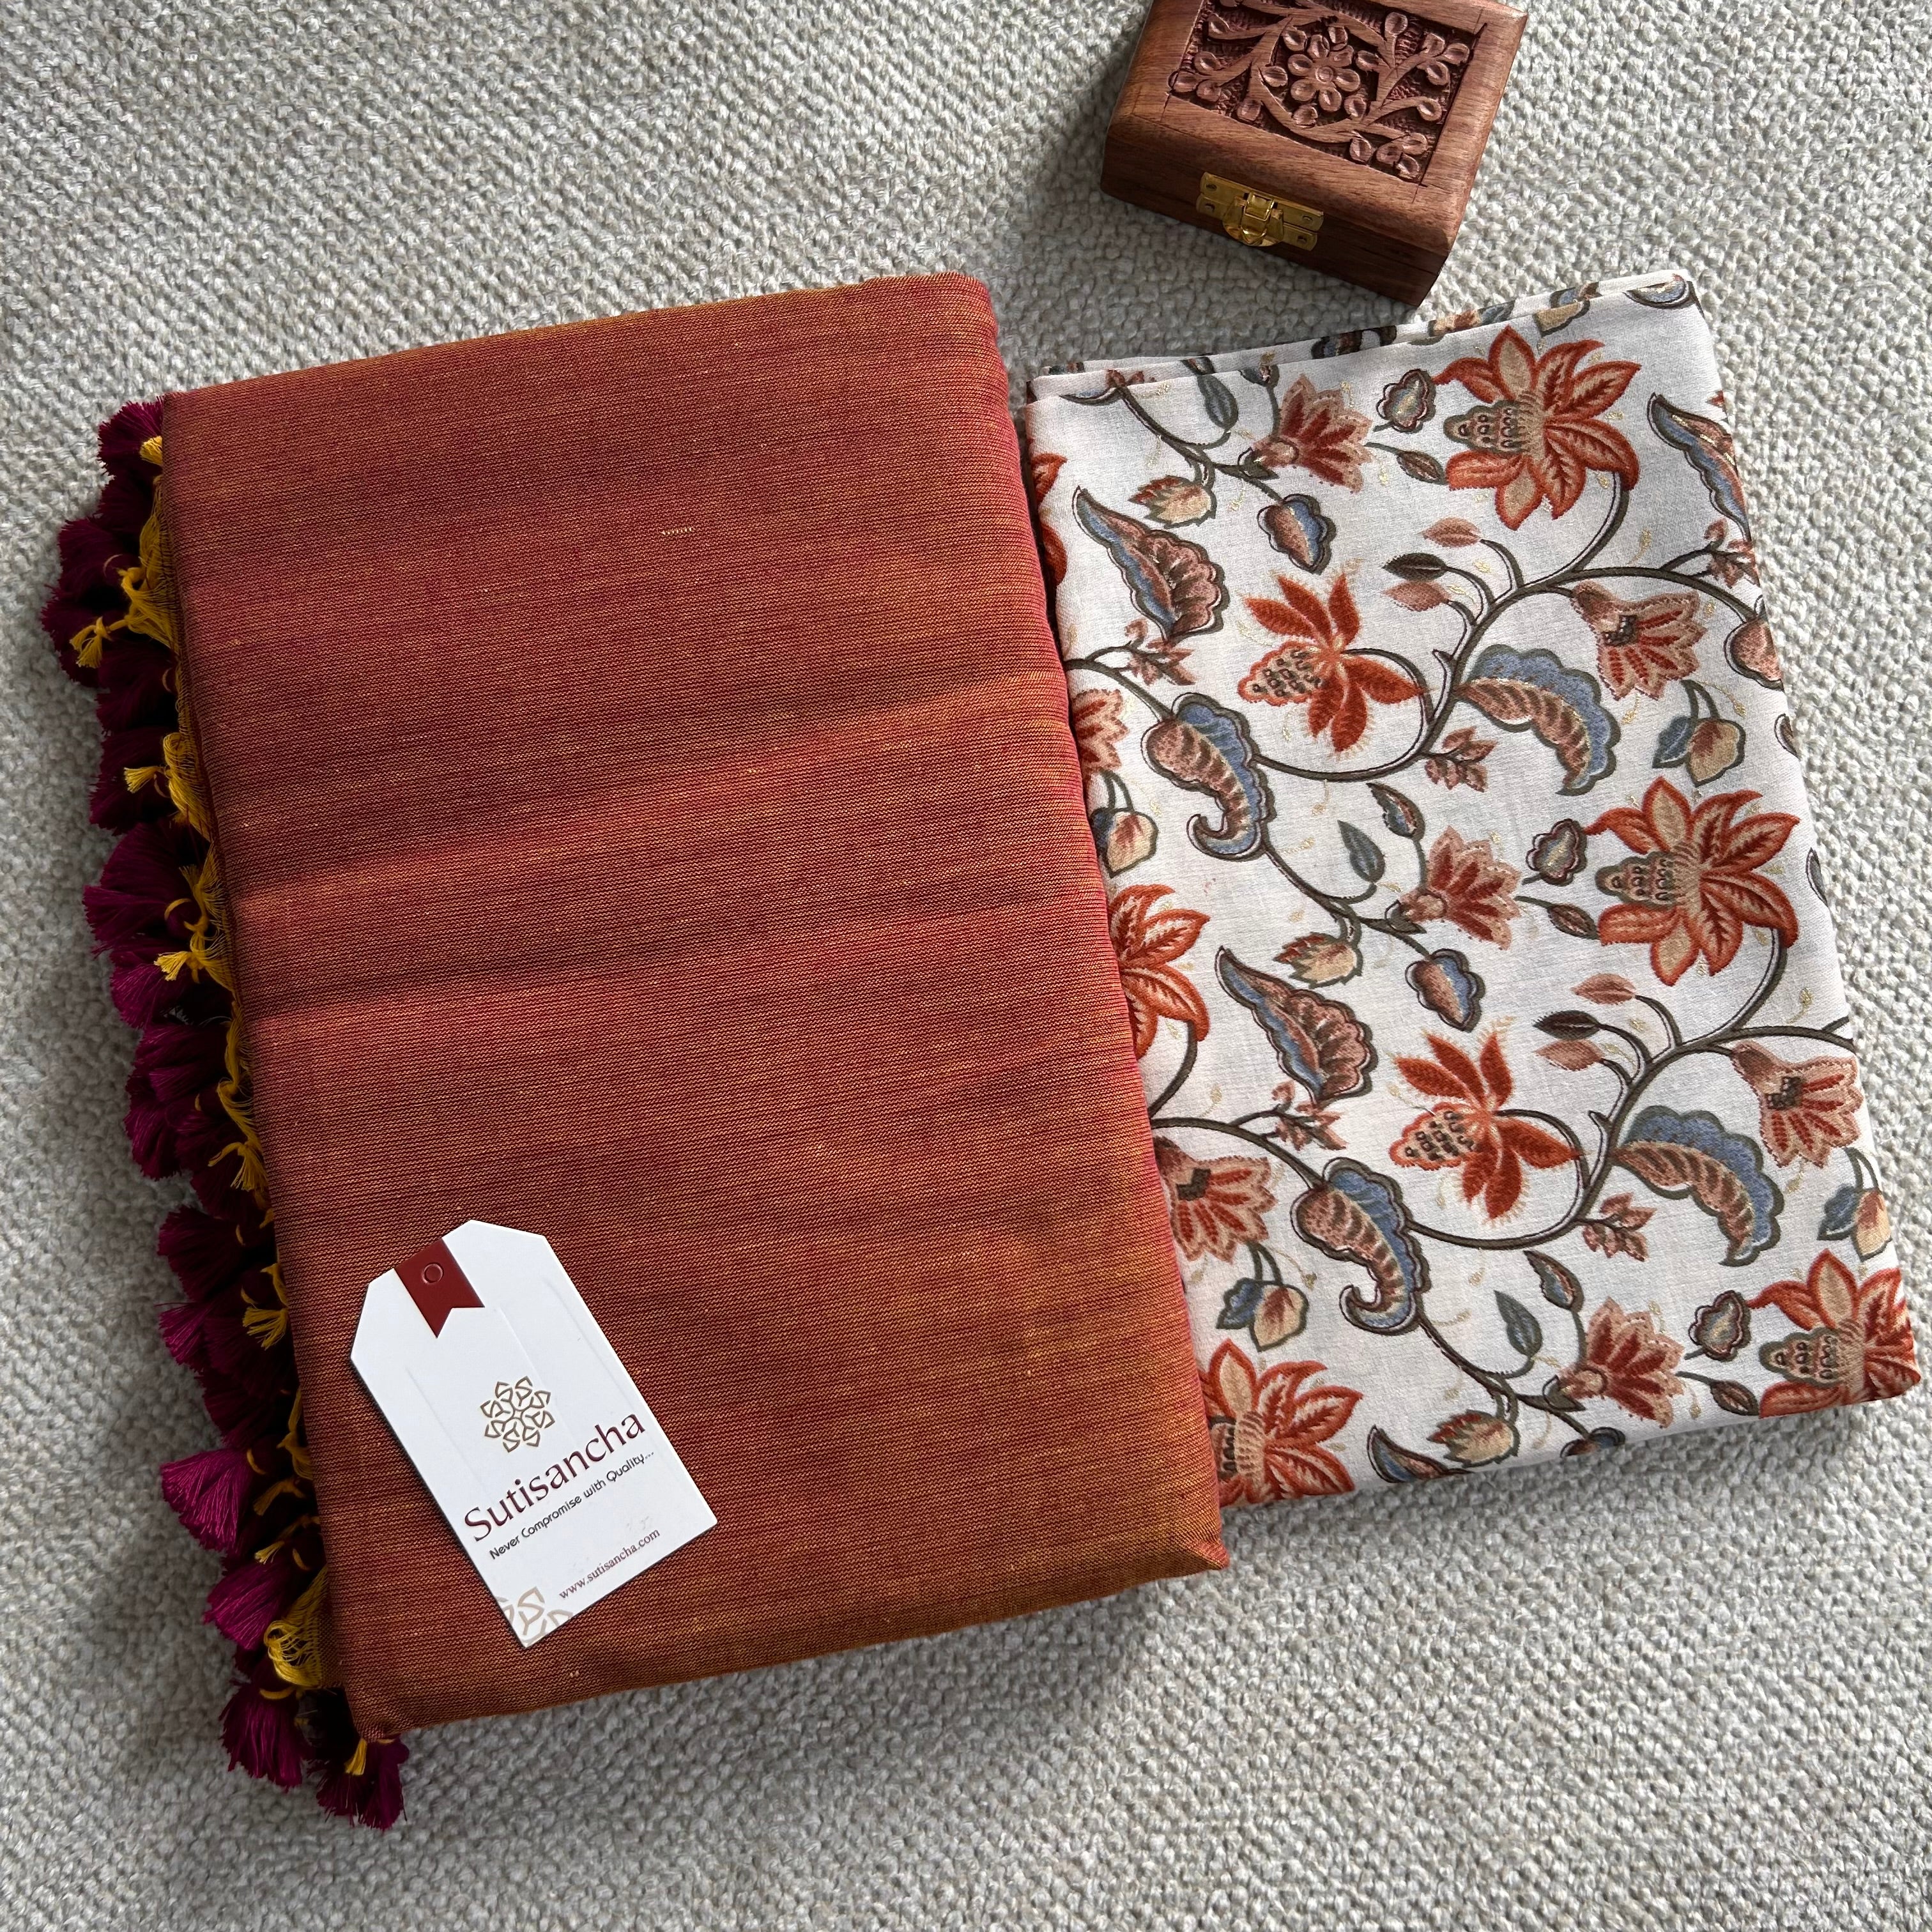 Sutisancha Rust Orange Handloom Cotton Saree With Designer Printed Blouse